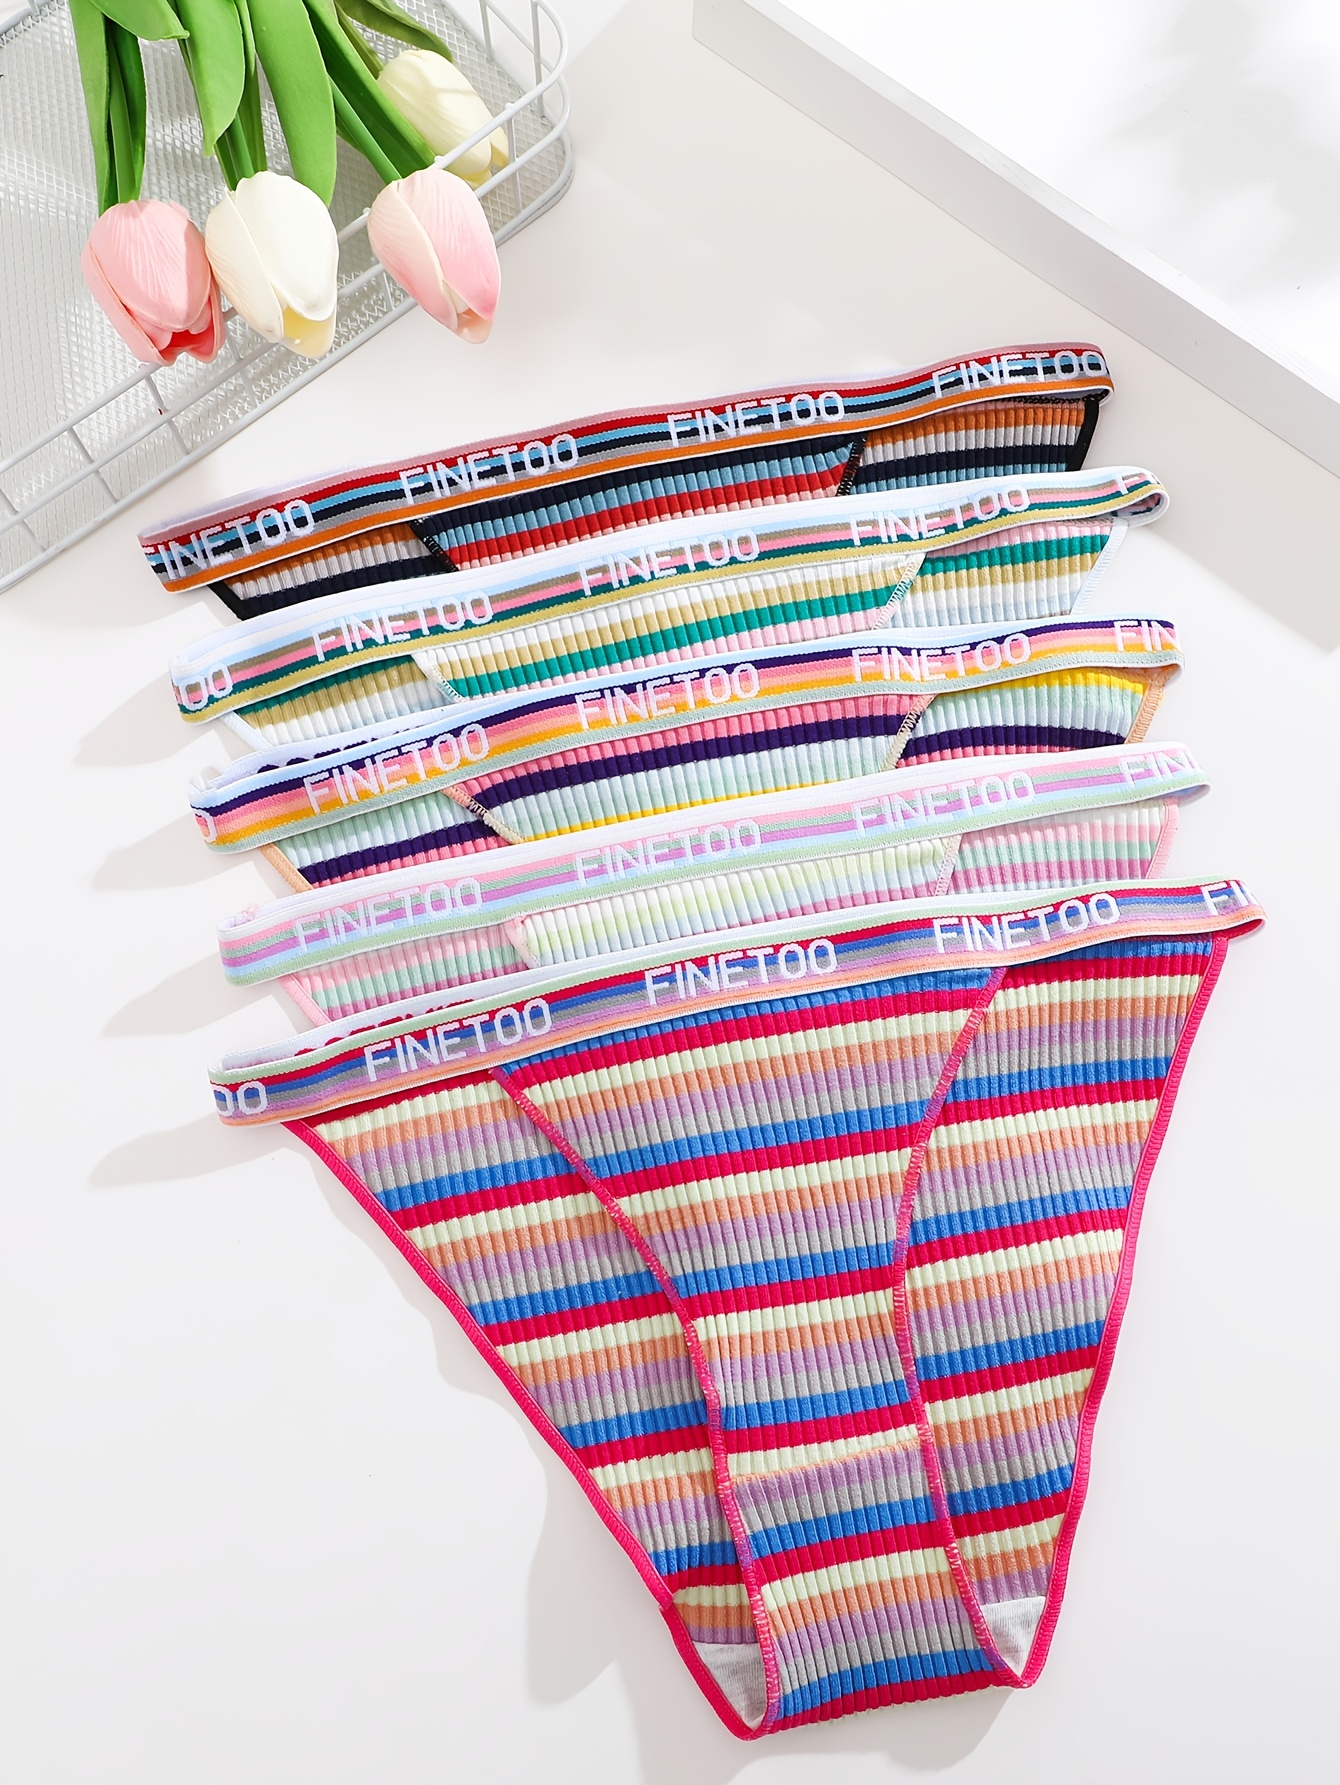  Rainbow Colors Women's High Waisted Underwear Soft